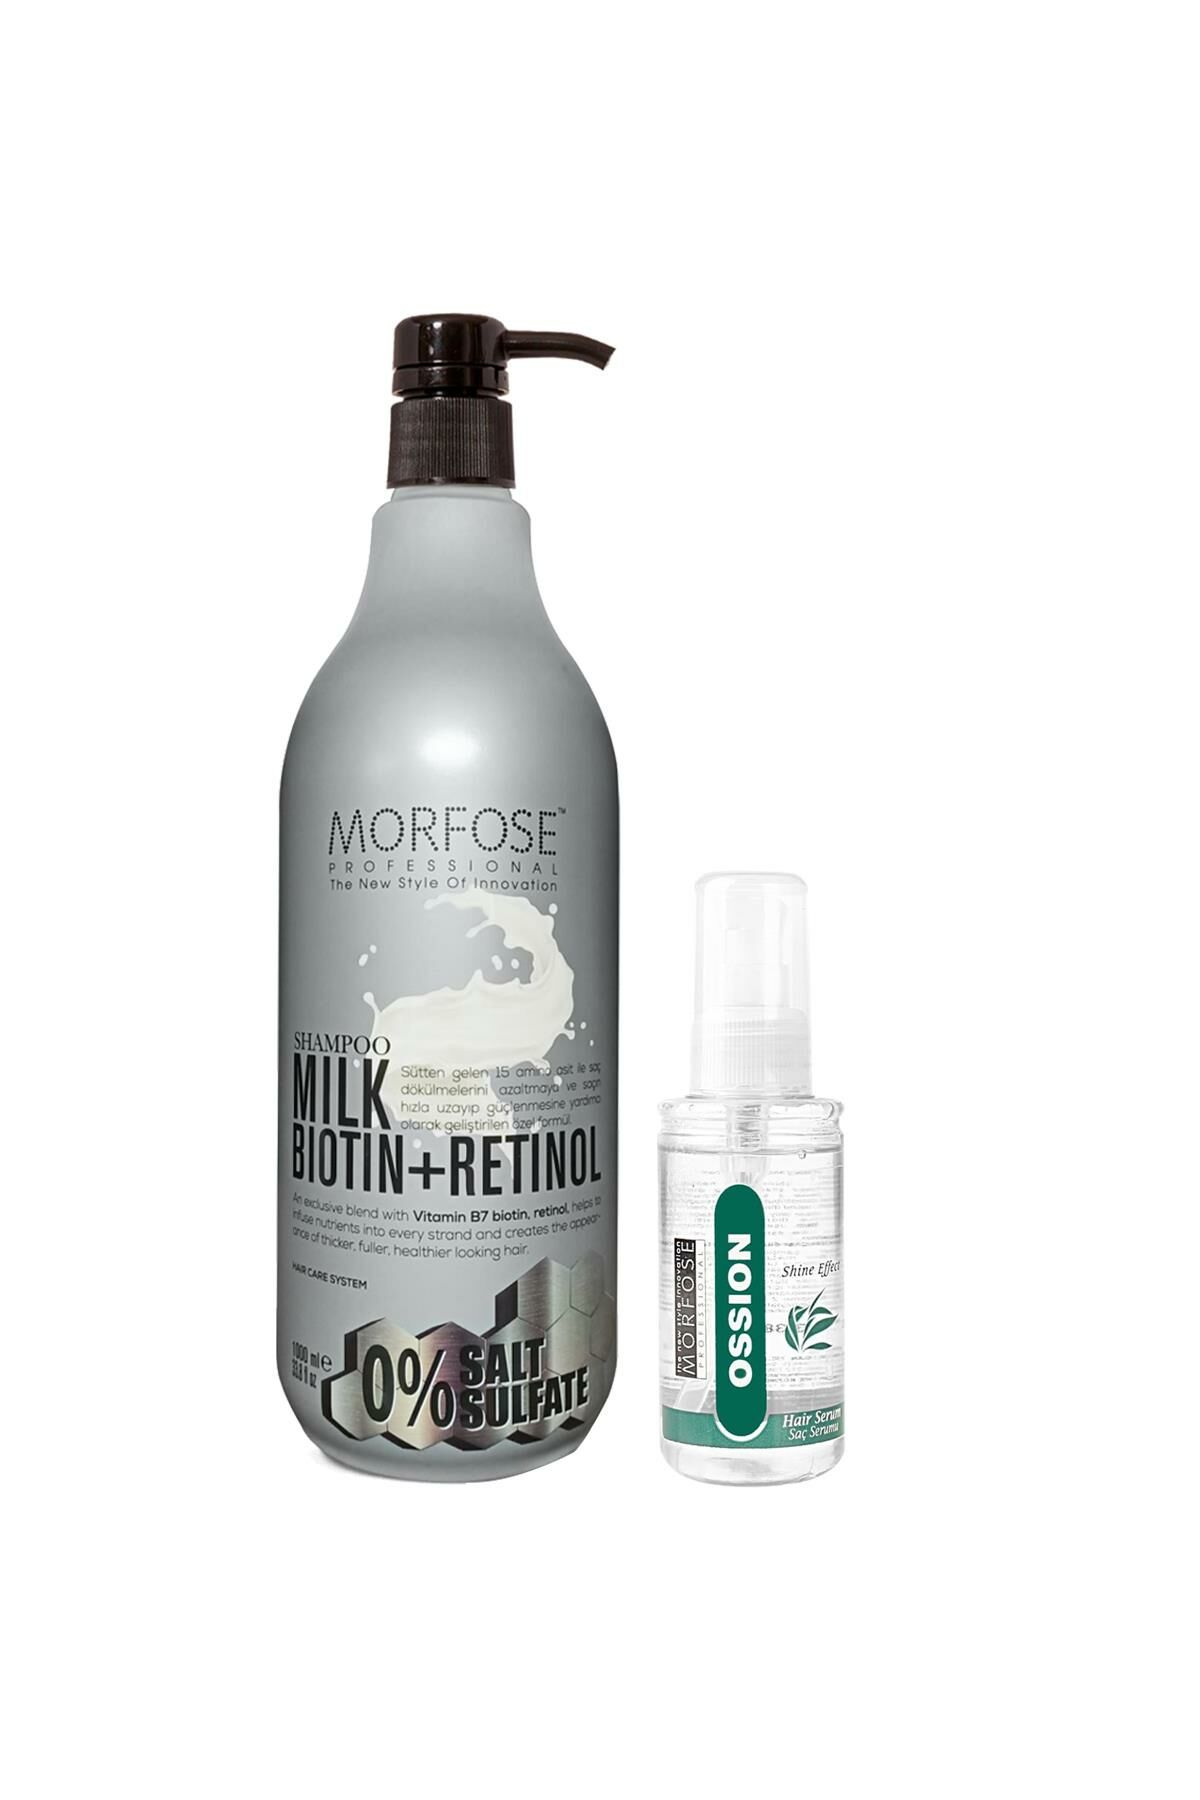 Morfose Sülfatsız Milk Biotin+Retinol İçerikli Tuzsuz Şampuan 1000 ml+Ossion Saç Serumu 100 ml